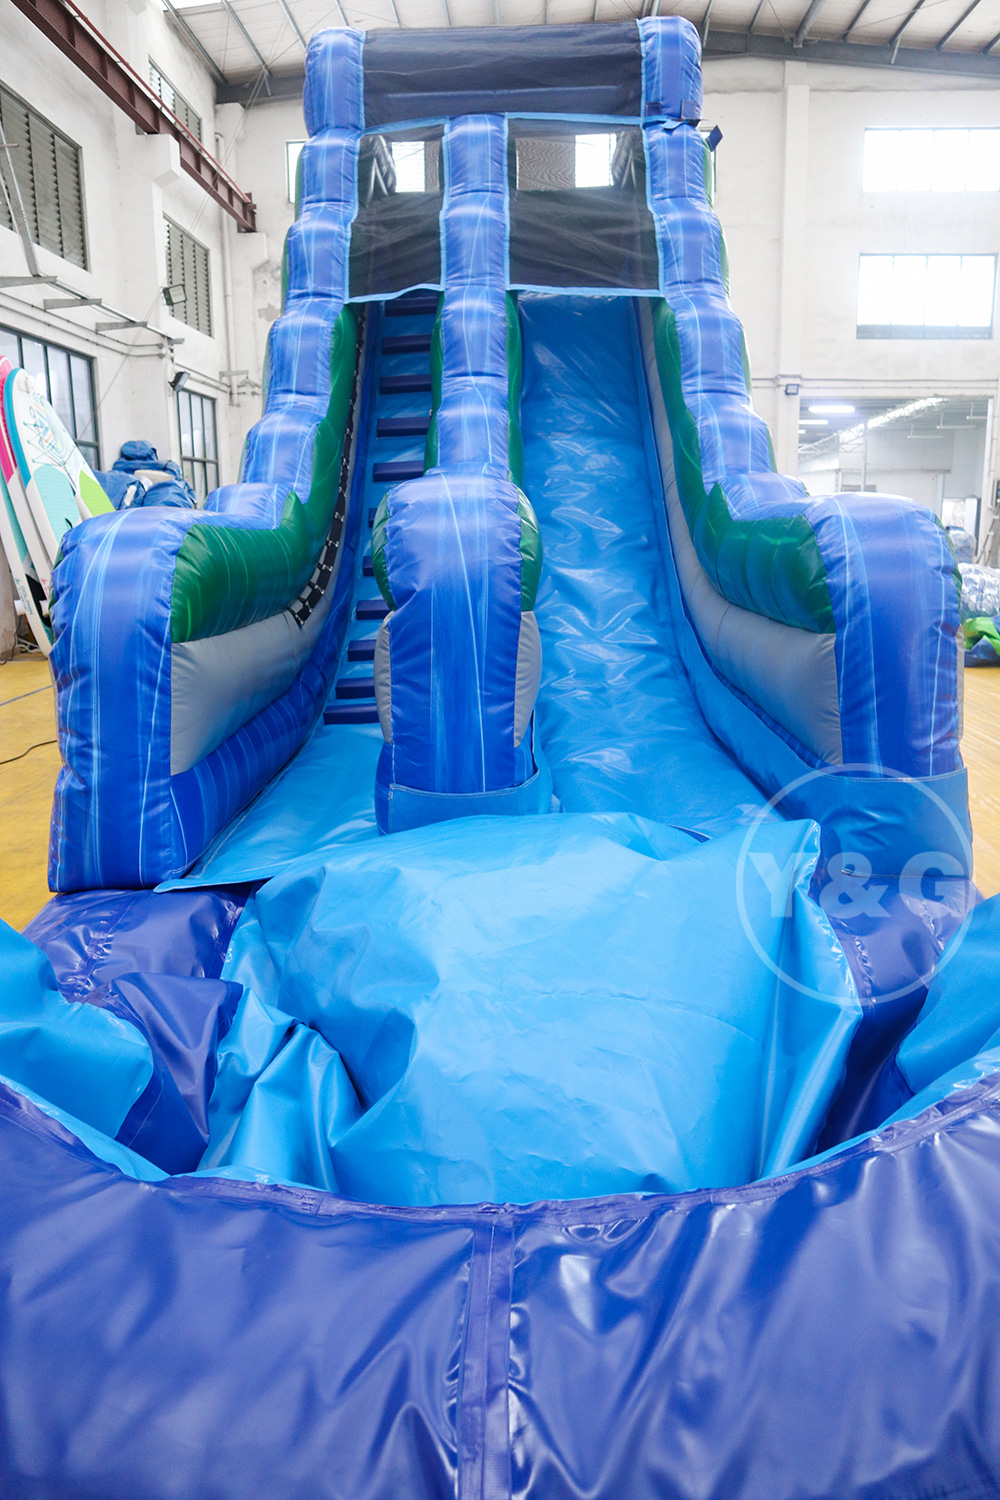 Inflatable giant marble water slideYG-106